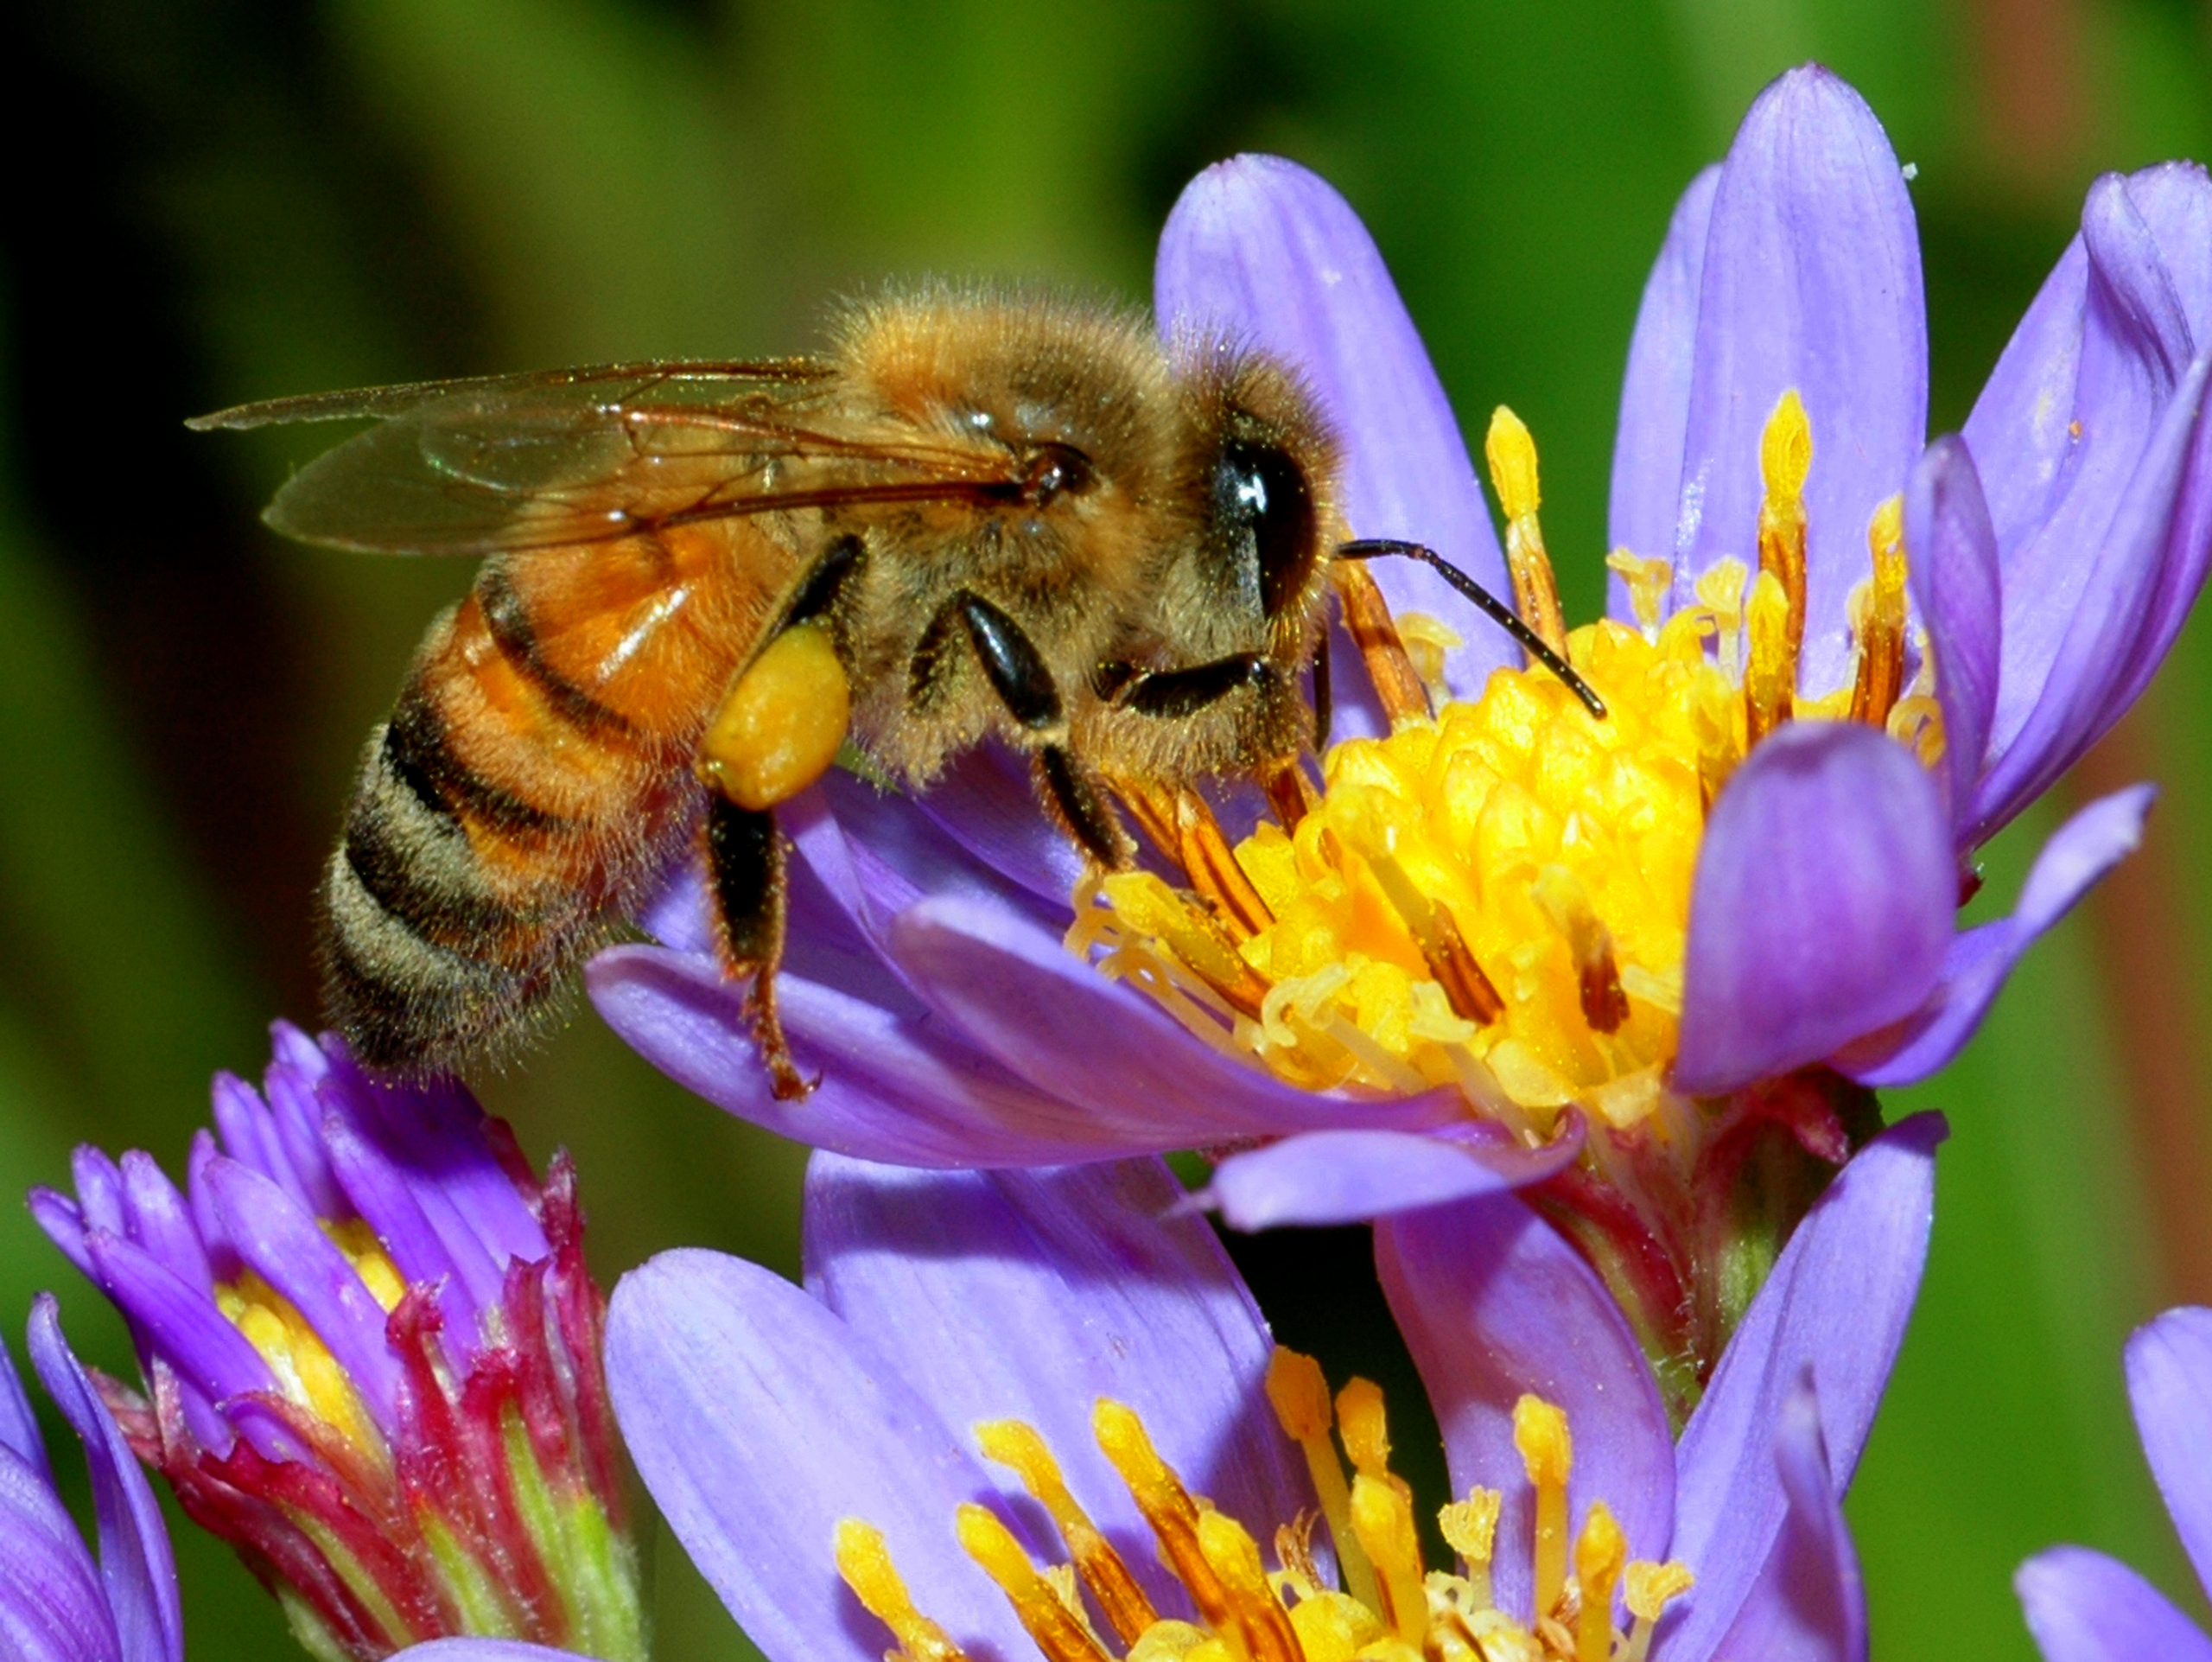 https://www.fllt.org/wp-content/uploads/2014/12/1-Honey-Bee-001.jpg